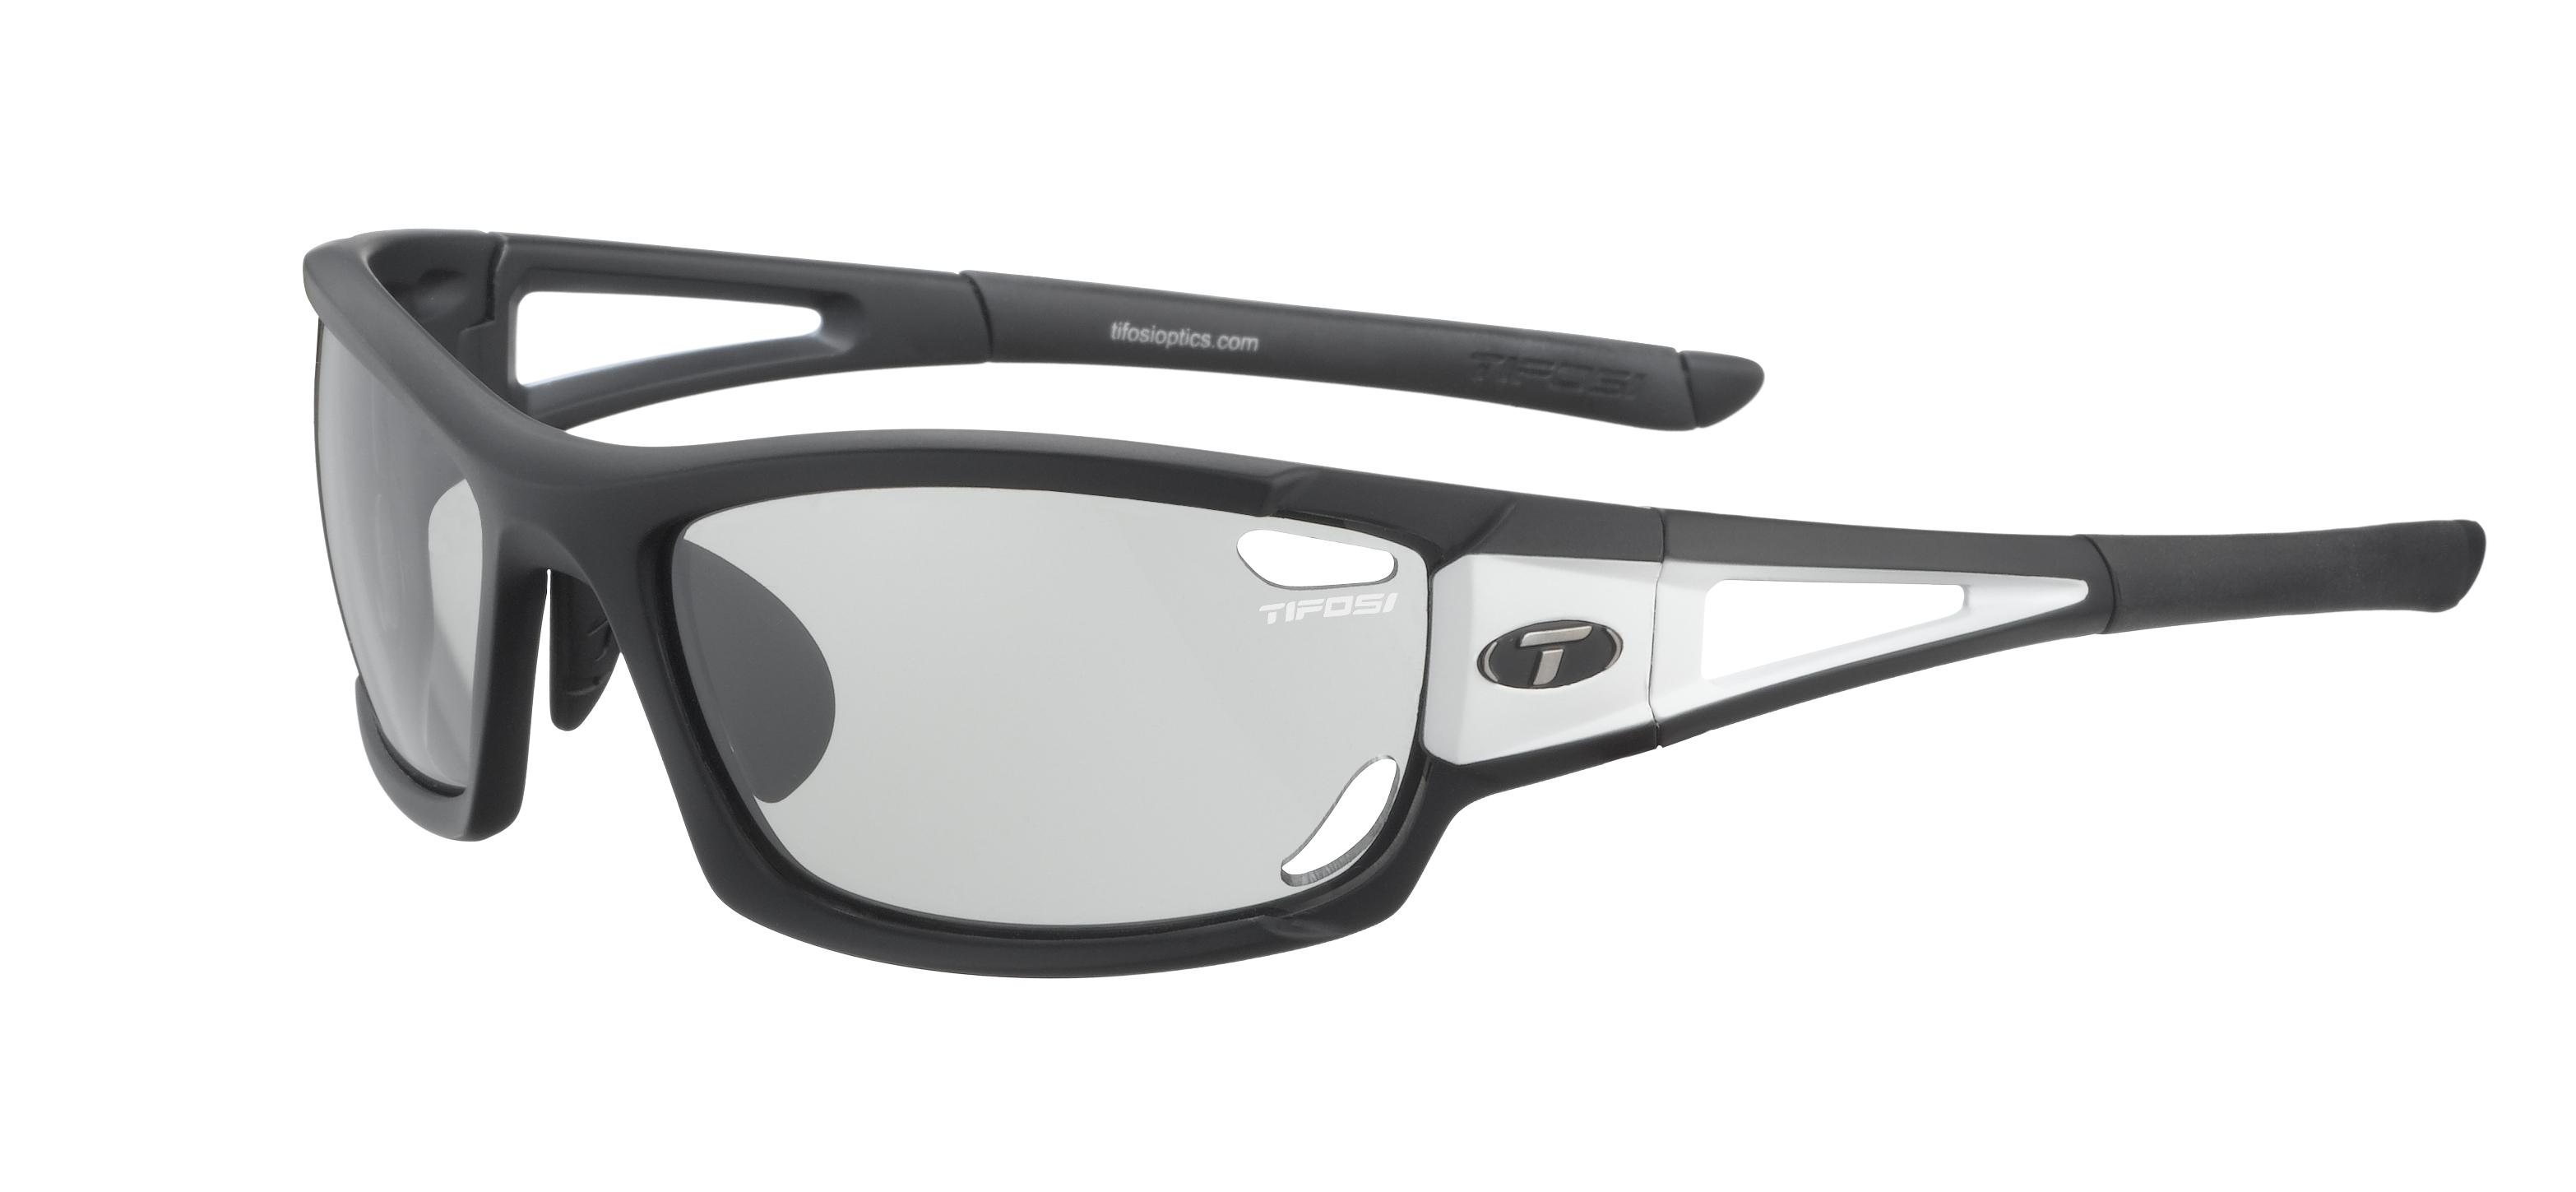 Tifosi Eyewear Dolomite 2.0 Night Lens Sunglasses - Black/white